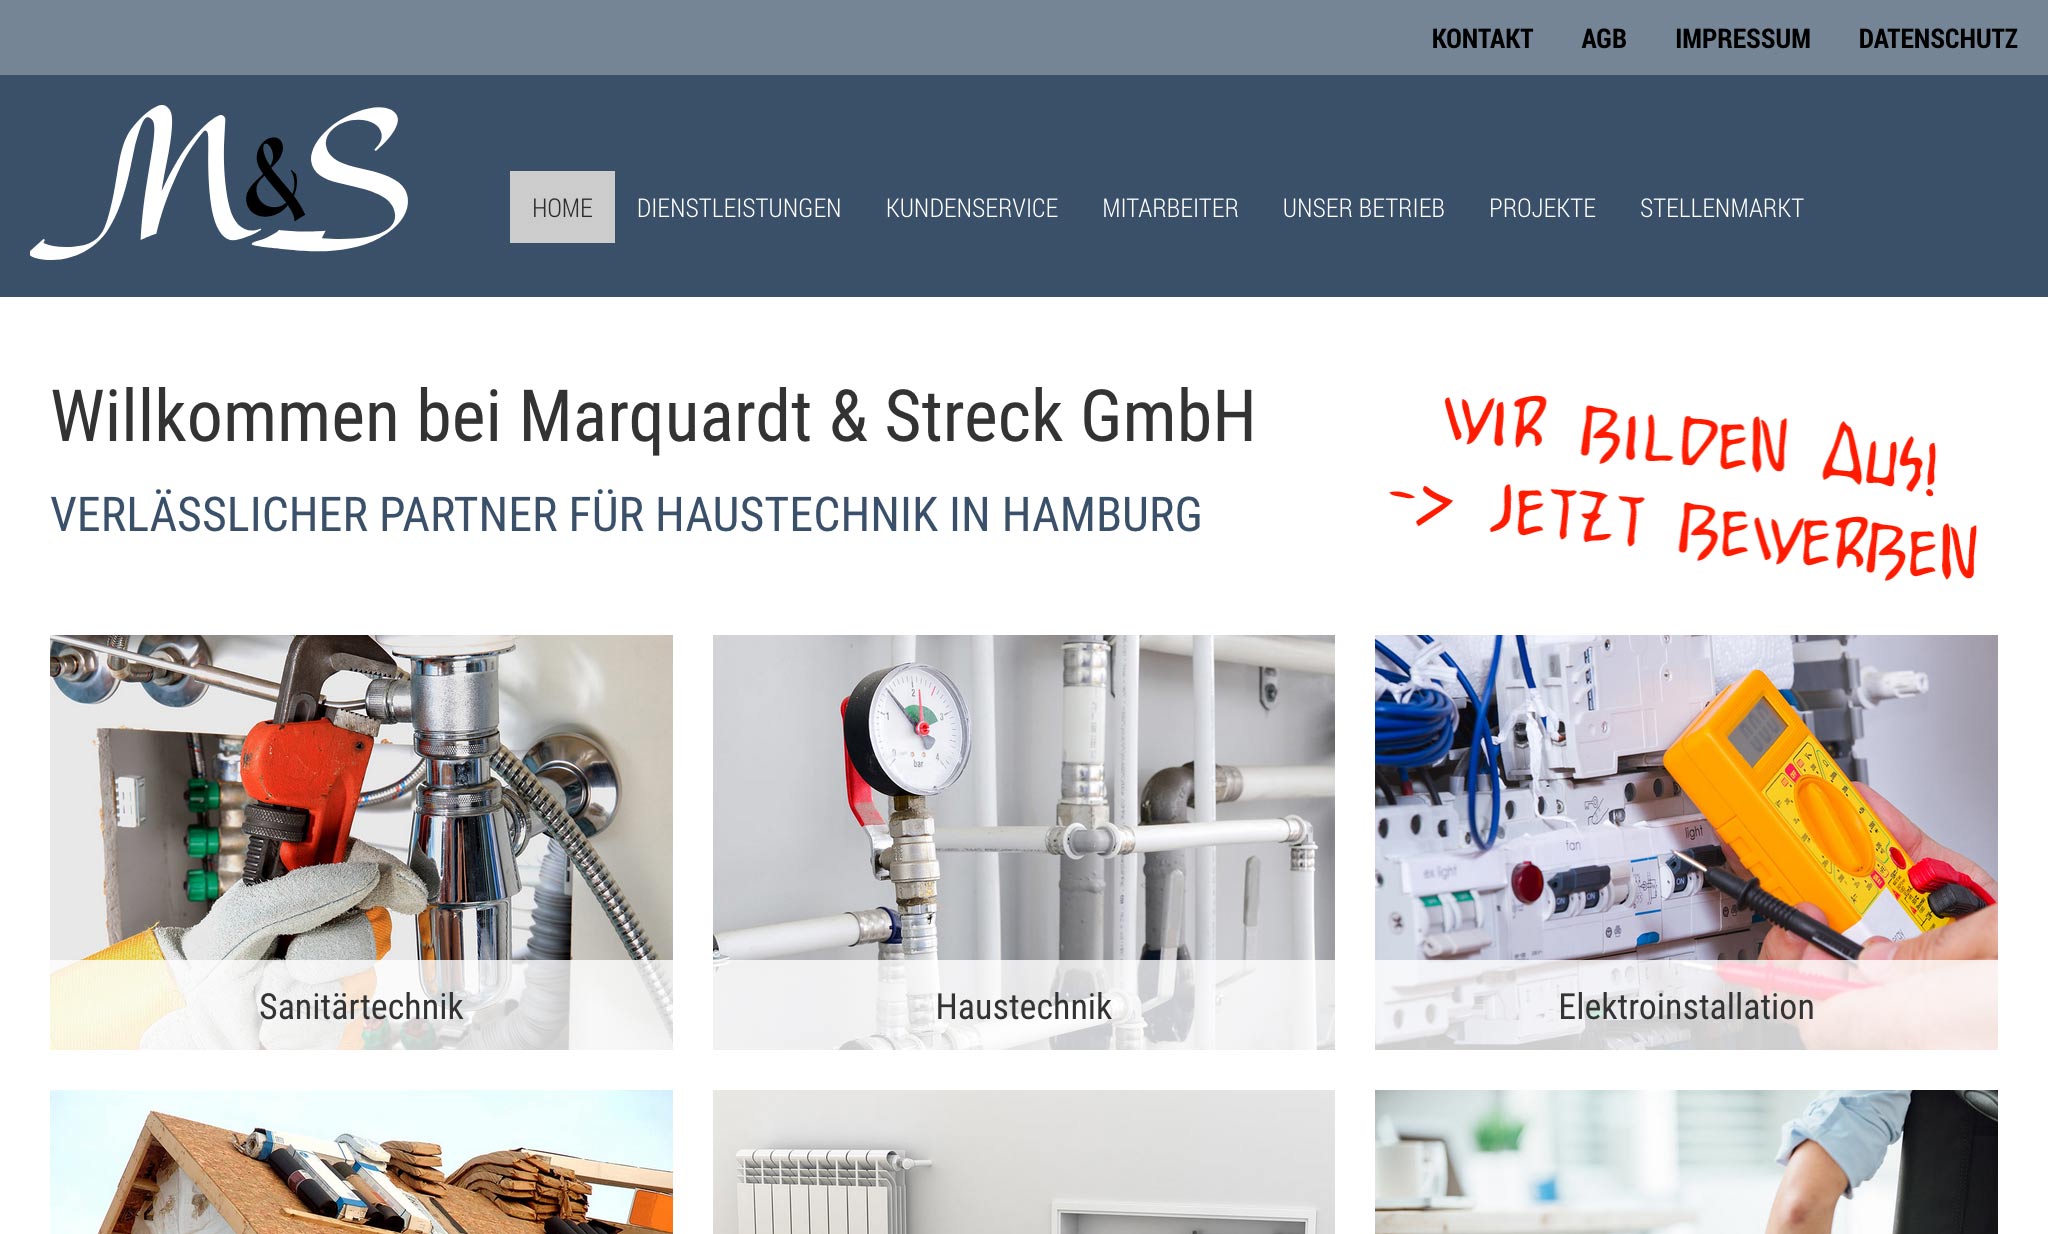 Marquardt & Streck GmbH 2019